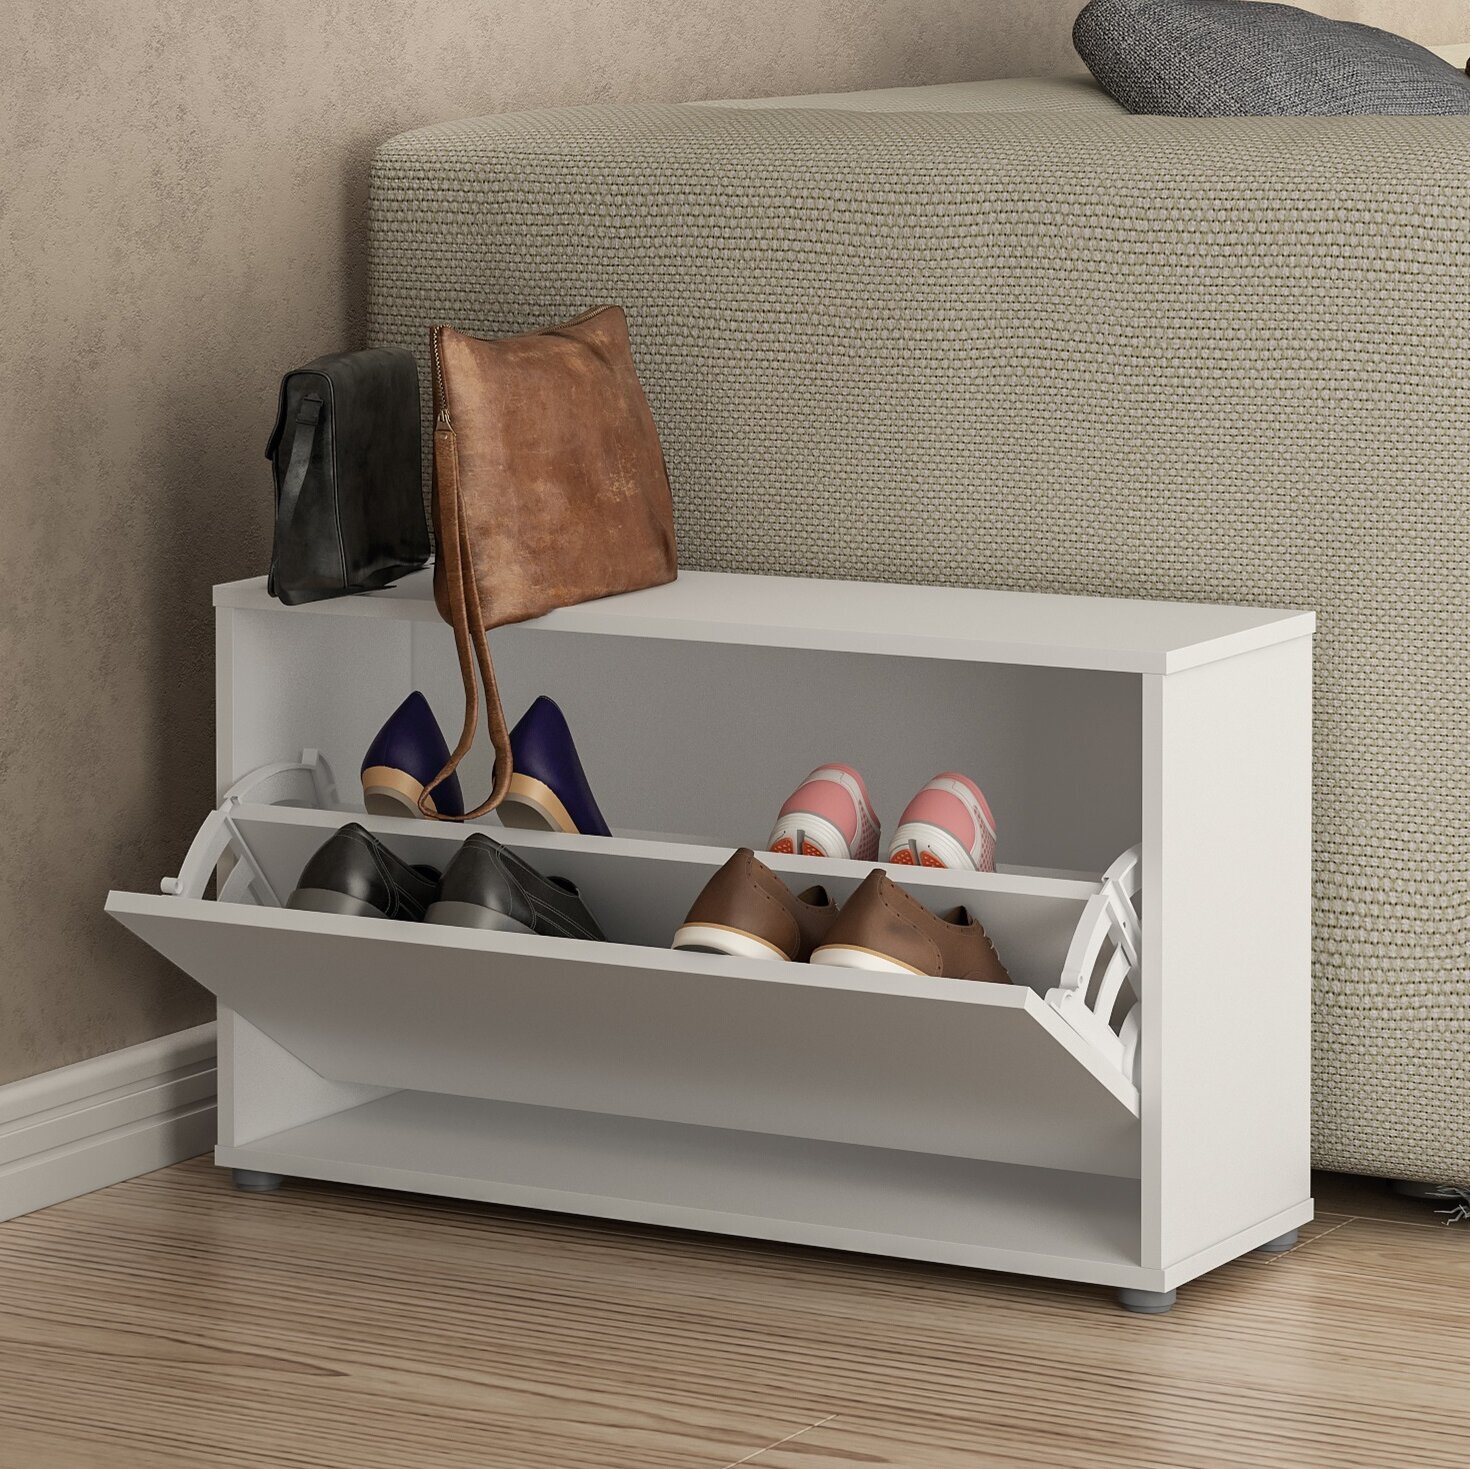 Small, minimalist shoe cabinet